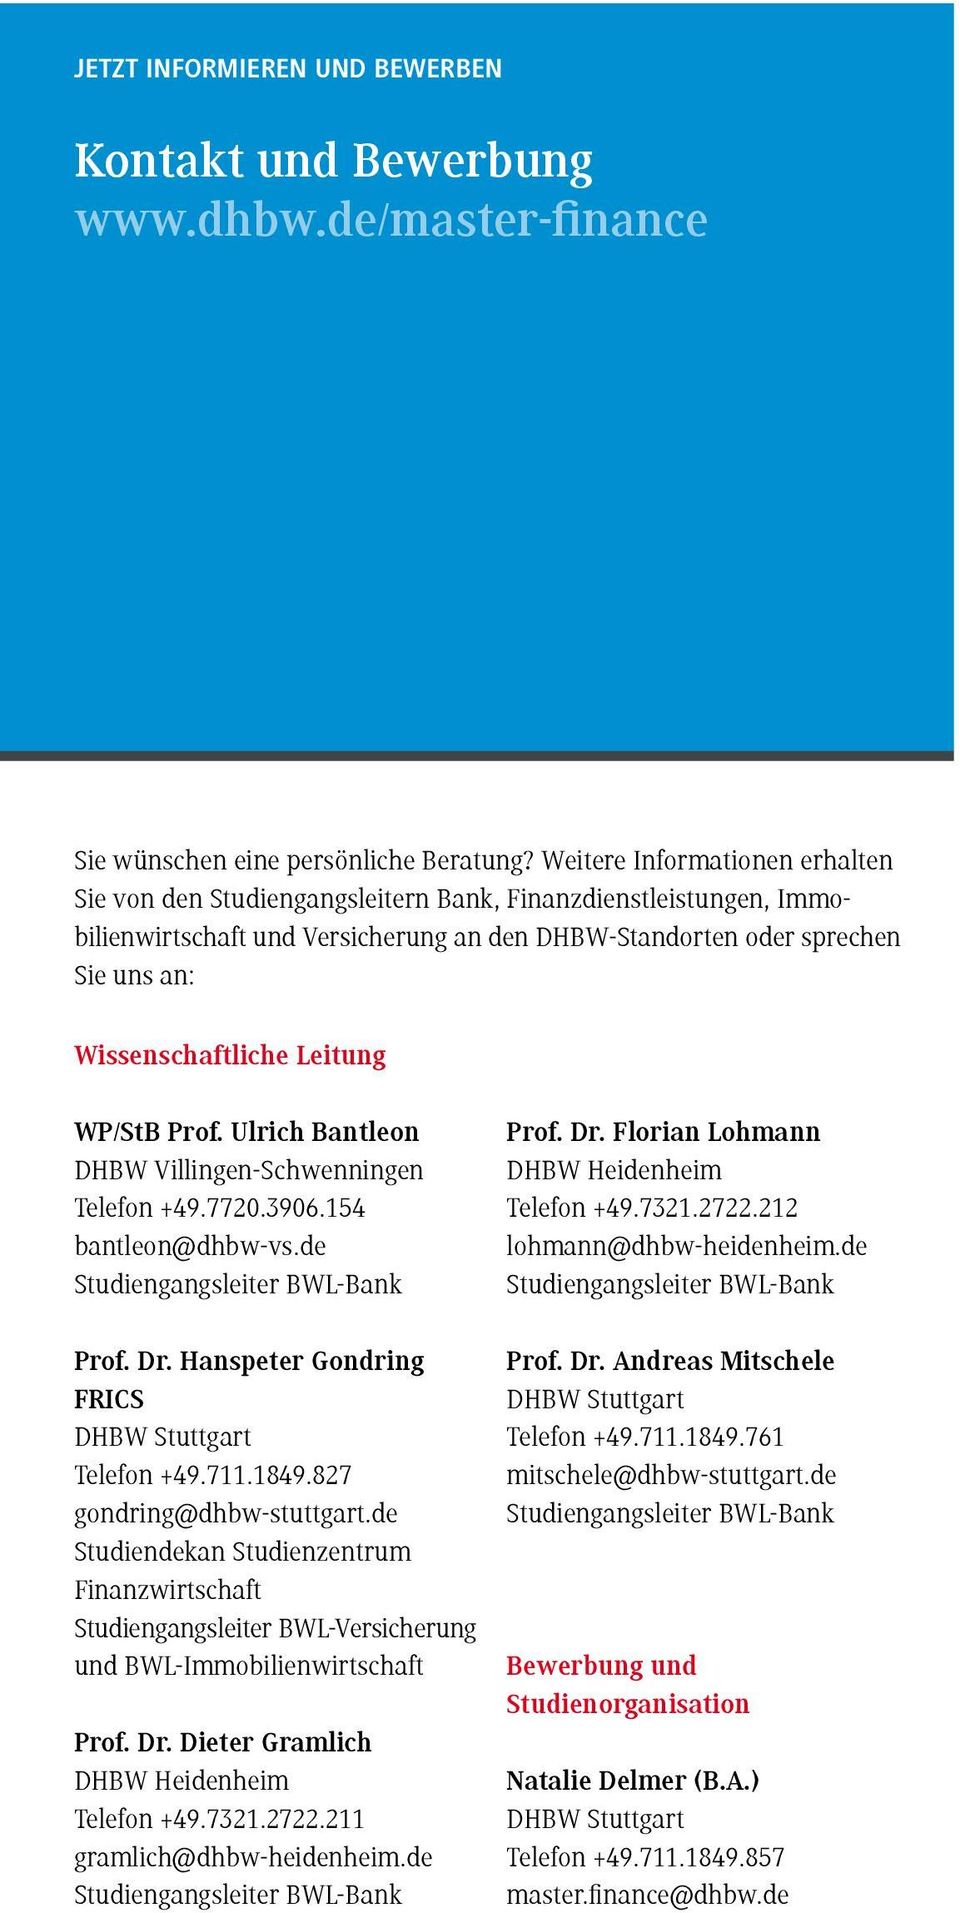 Leitung WP/StB Prof. Ulrich Bantleon DHBW Villingen-Schwenningen Telefon +49.7720.3906.154 bantleon@dhbw-vs.de Prof. Dr. Hanspeter Gondring FRICS DHBW Stuttgart Telefon +49.711.1849.